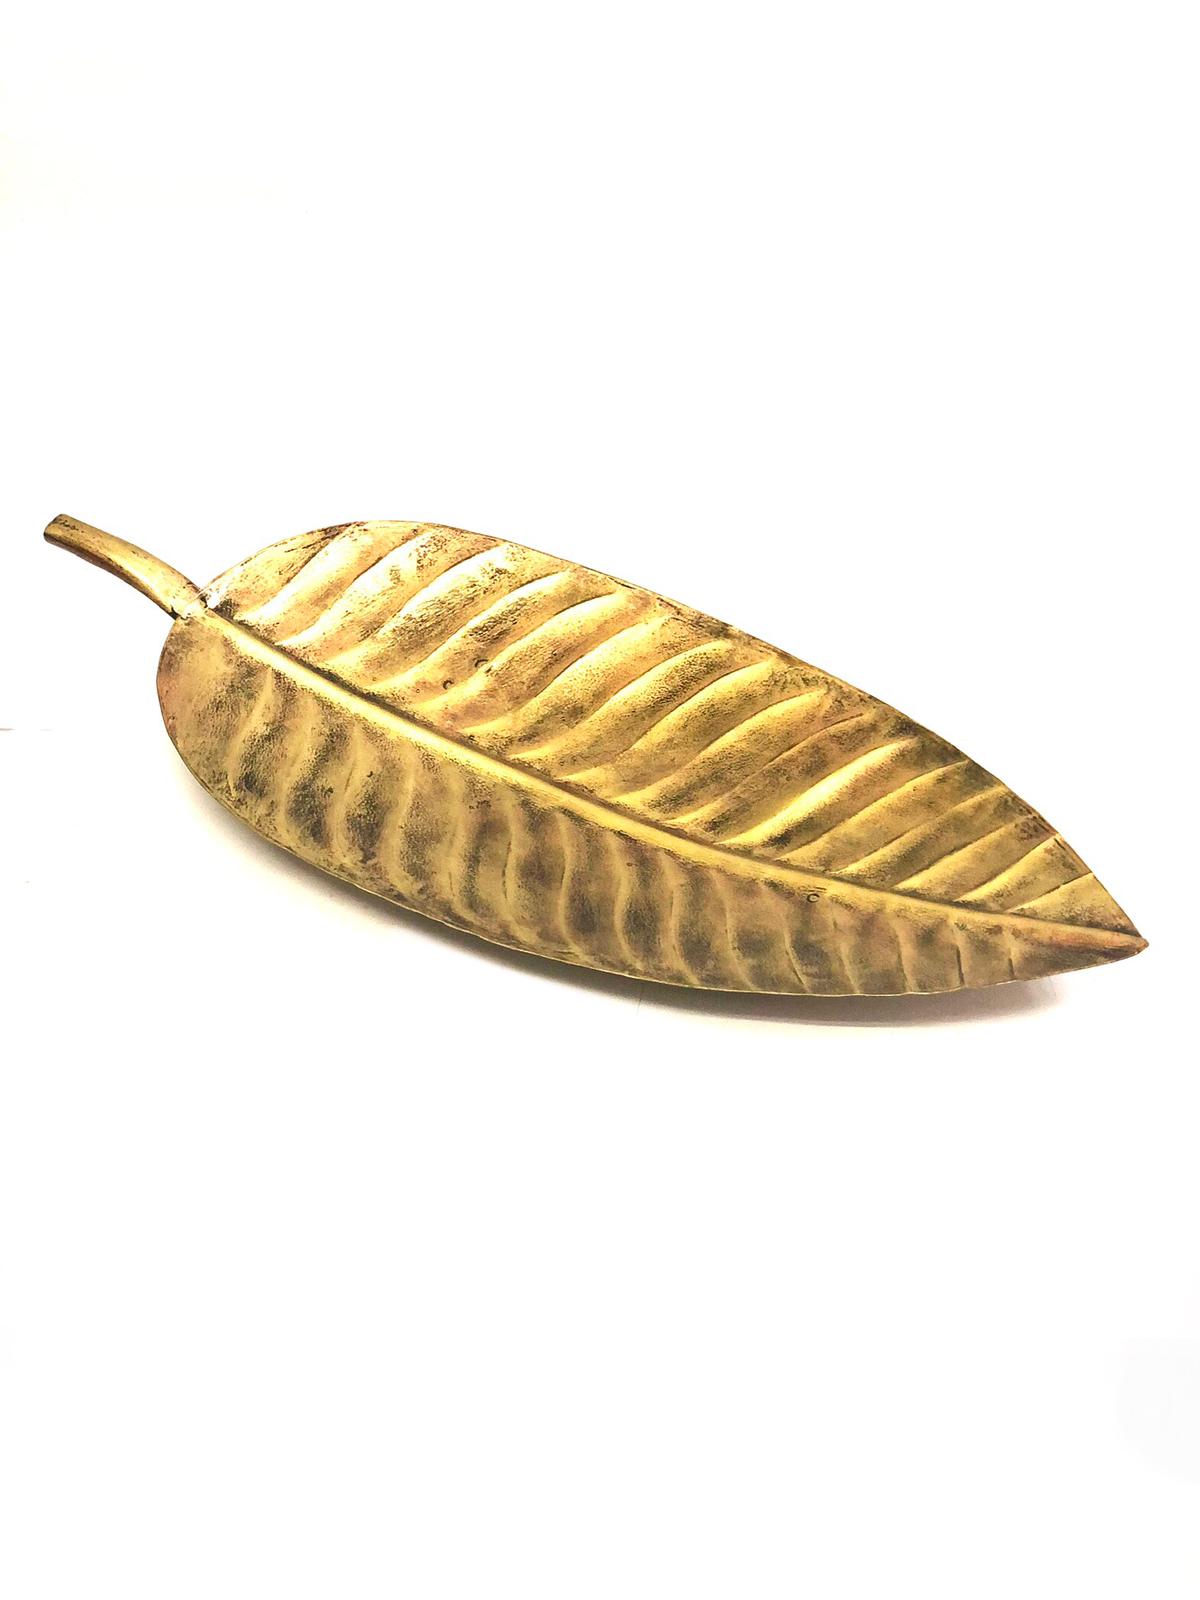 Leaf Platter Unique Way Of Serving Snacks Metal Handmade From Tamrapatra